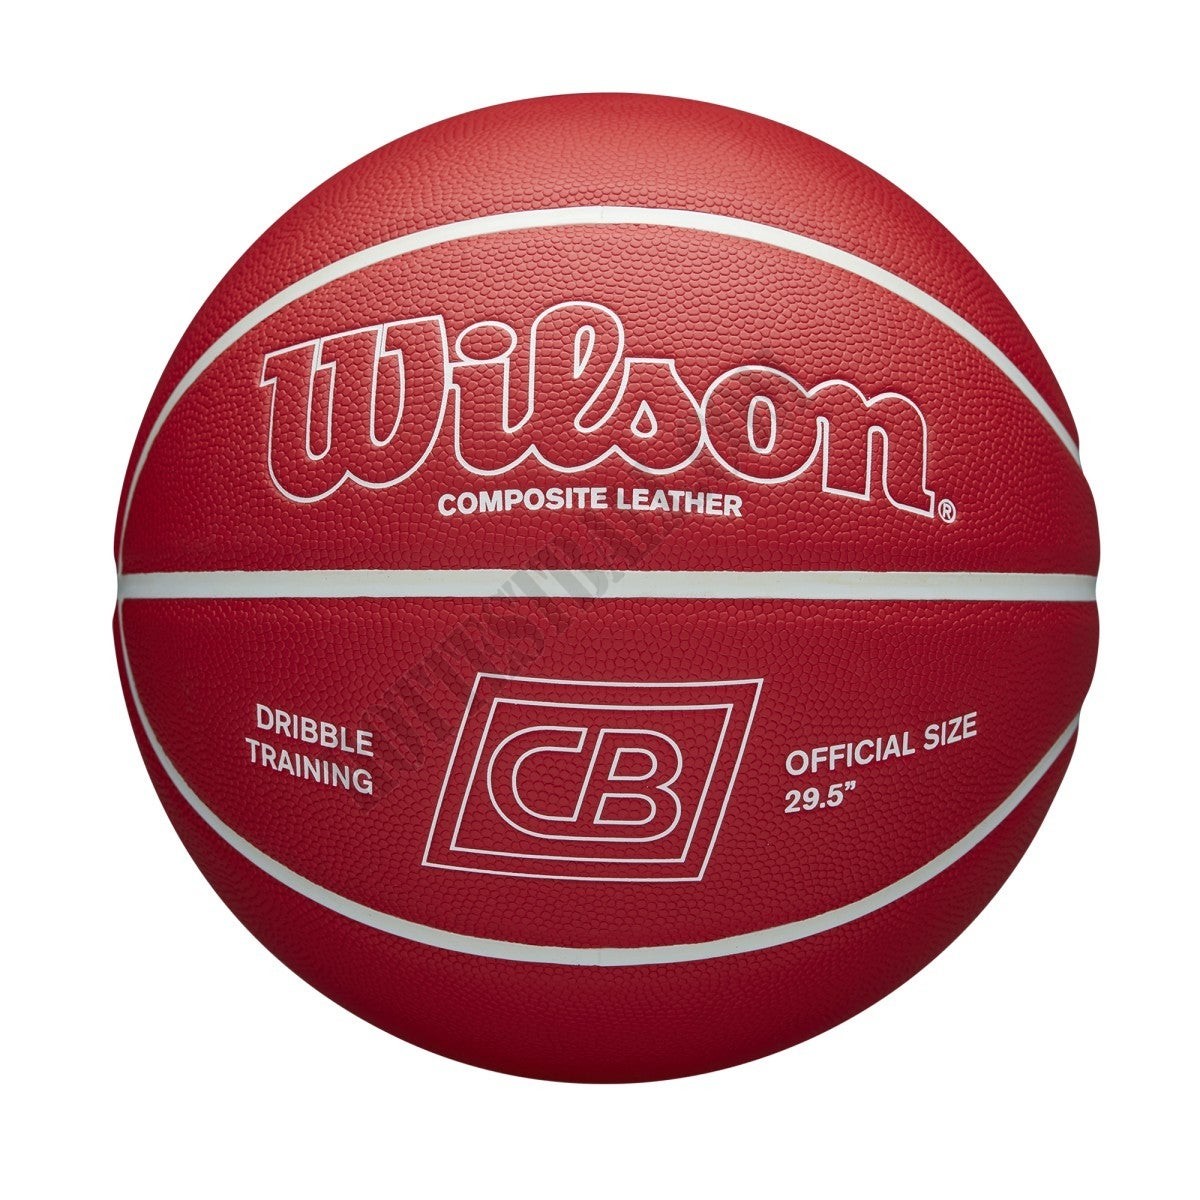 Chris Brickley Dribble Training Basketball - Wilson Discount Store - Chris Brickley Dribble Training Basketball - Wilson Discount Store